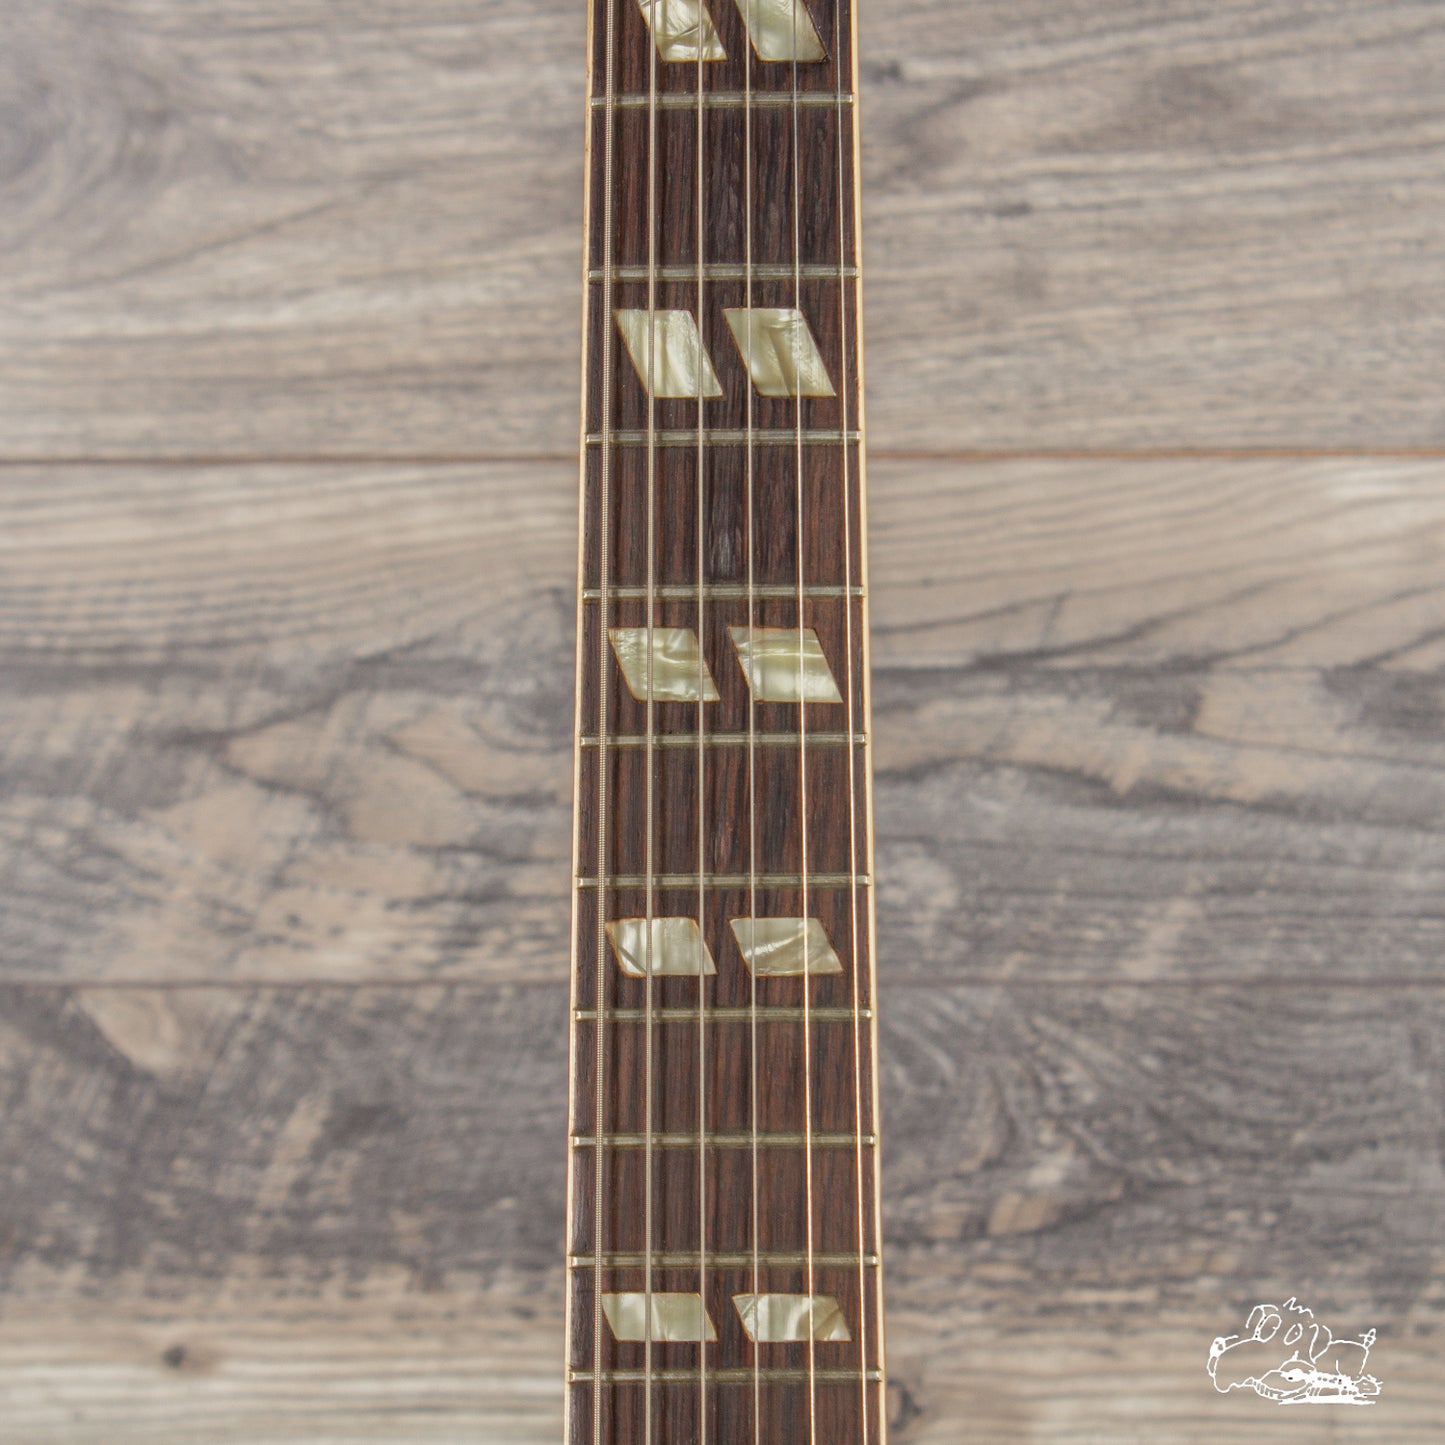 1955 Gibson ES-175-D